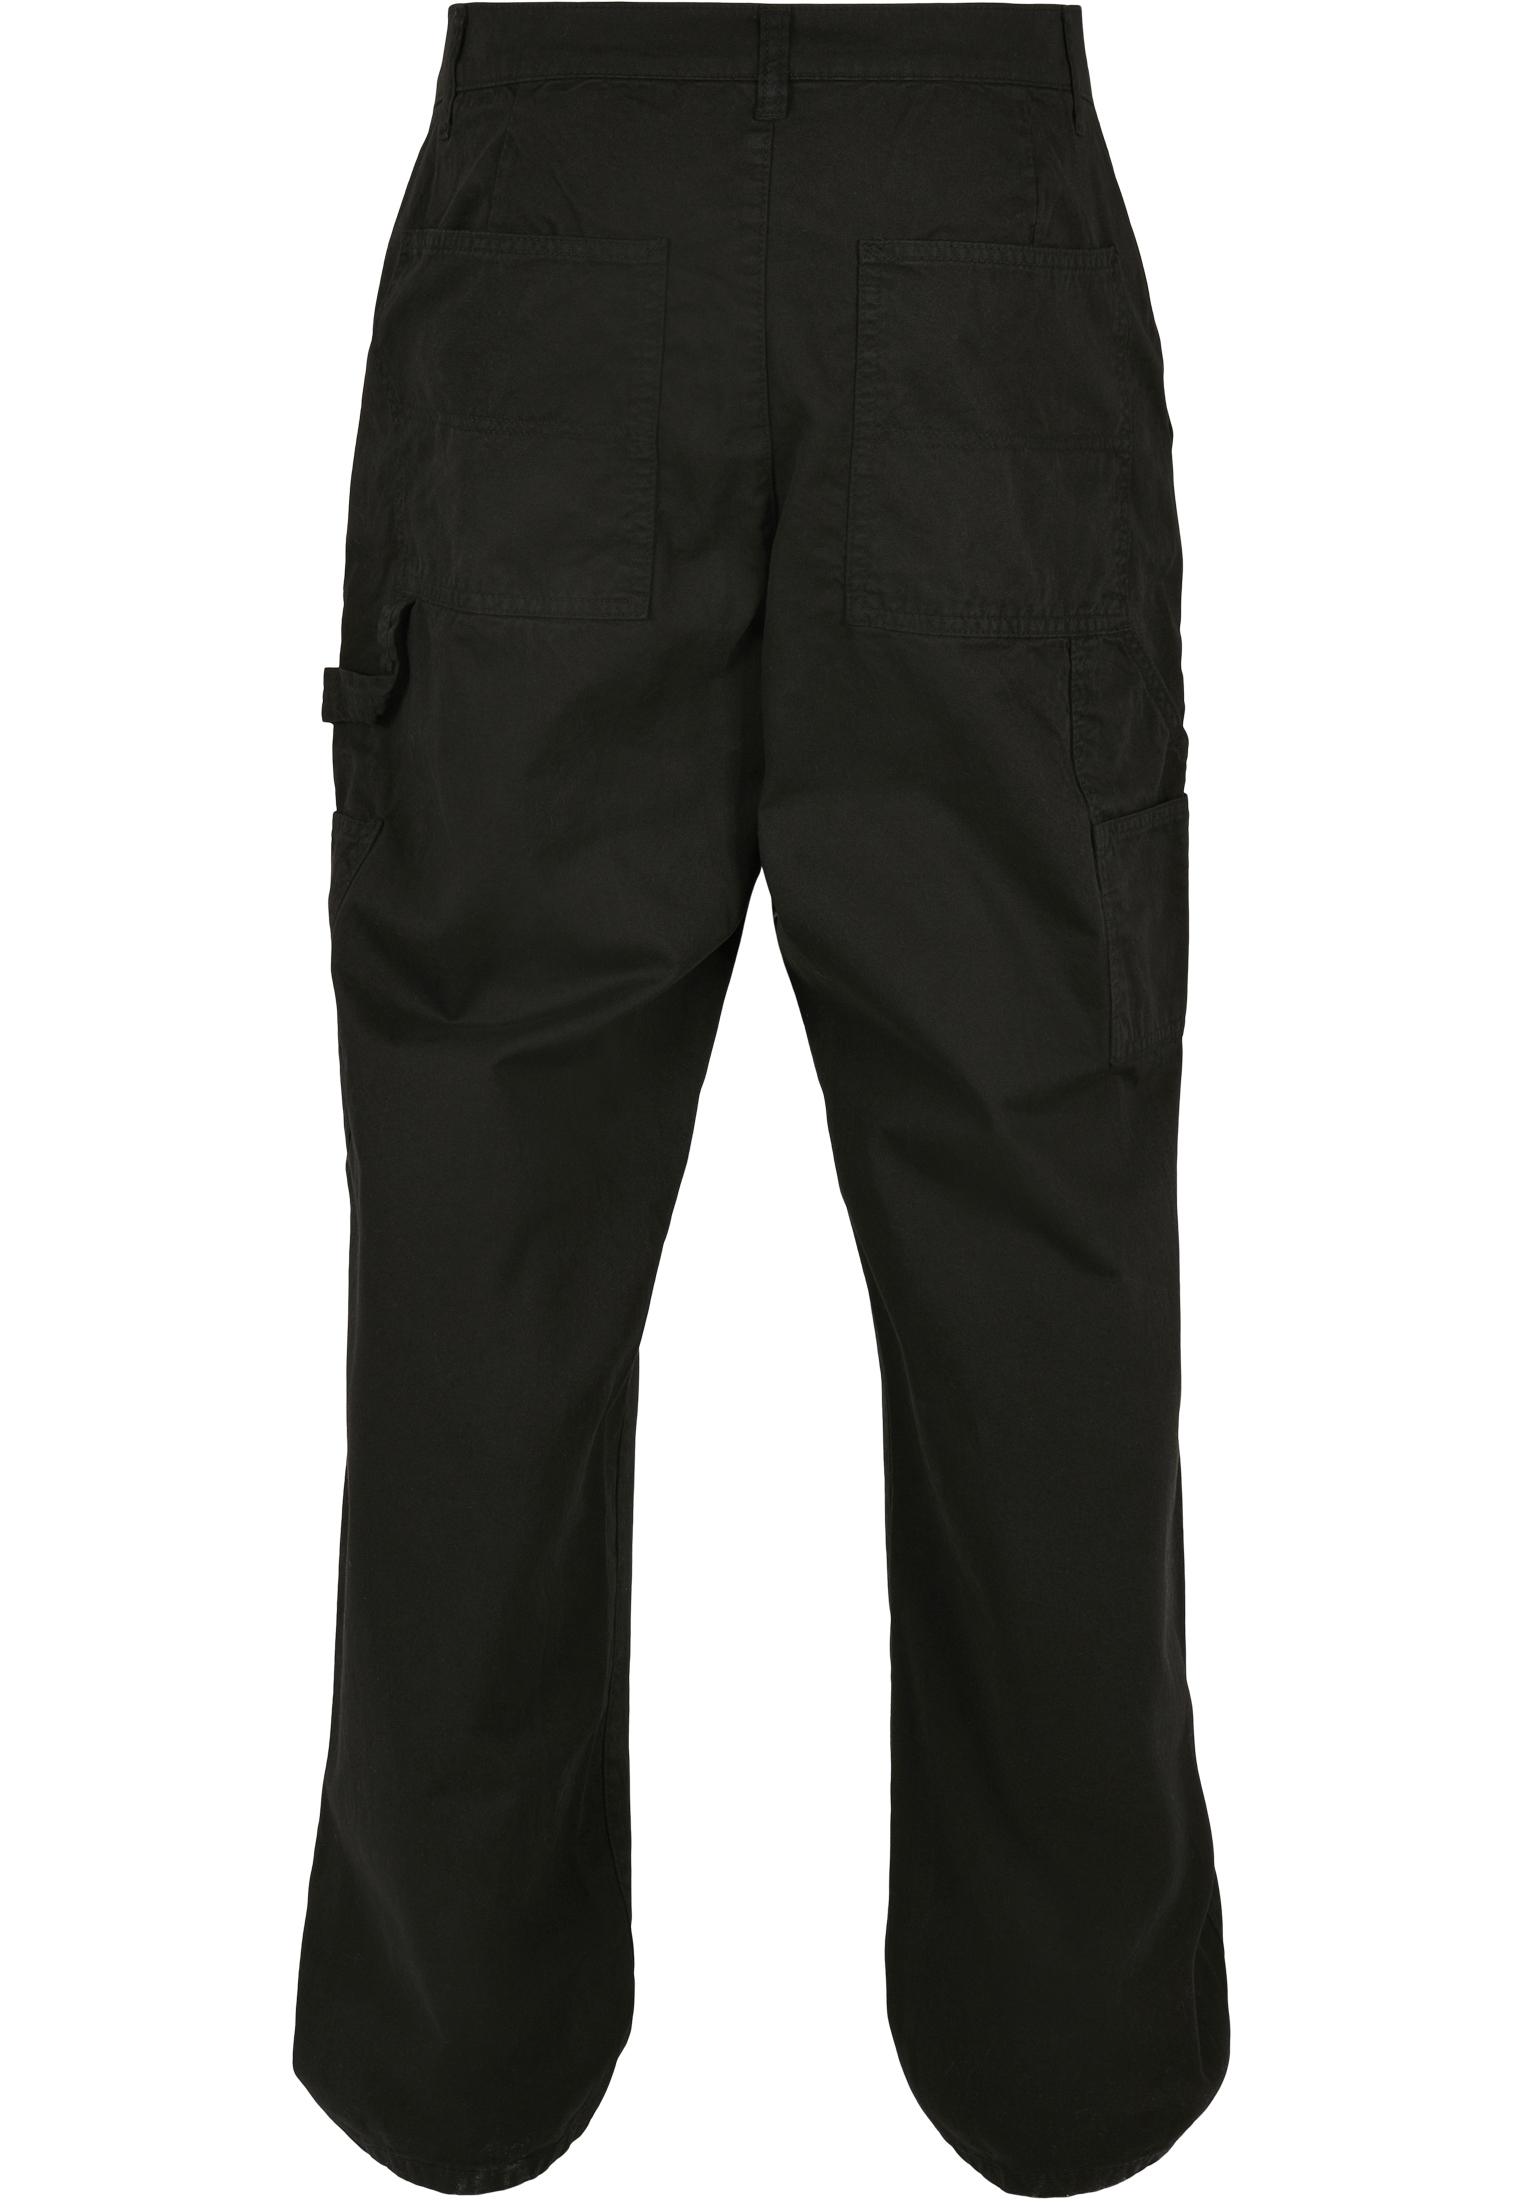 Hosen Carpenter Pants in Farbe black